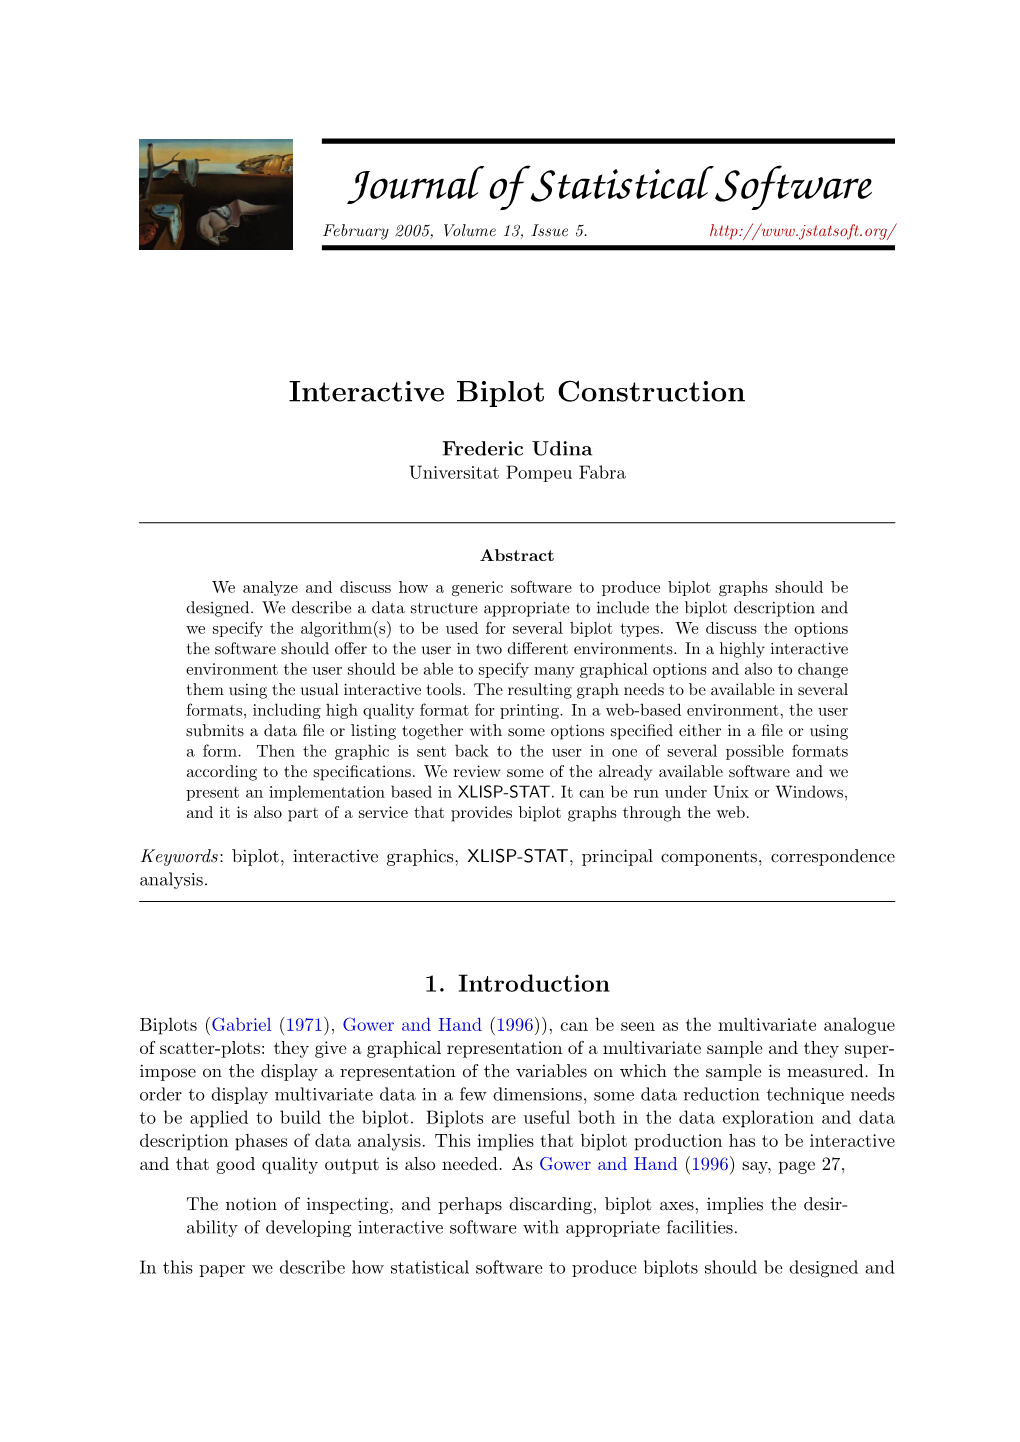 Interactive Biplot Construction